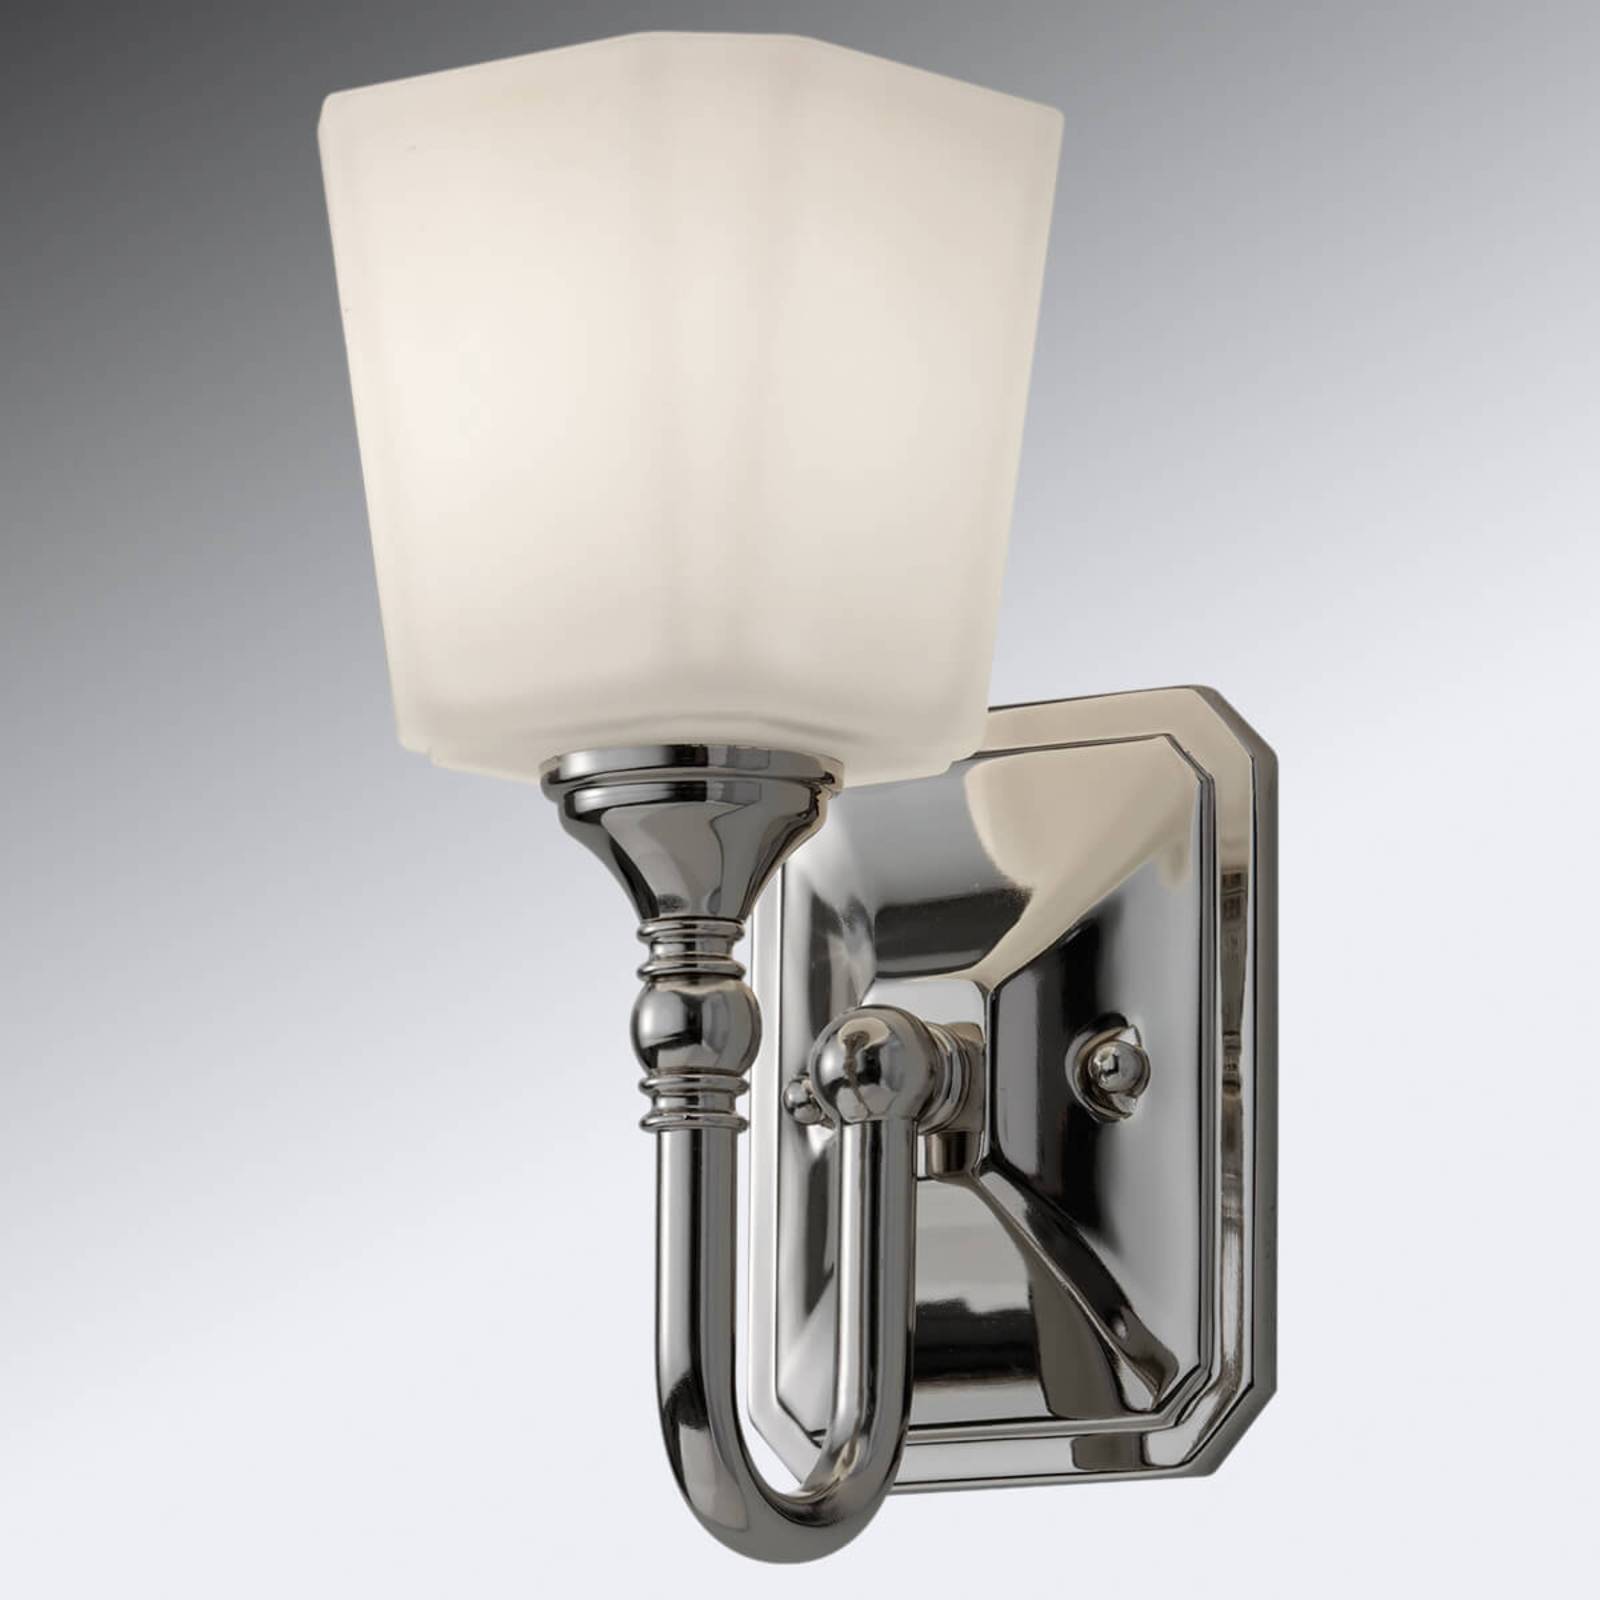 Feiss fürdőszobai fali lámpa concord klasszikus design